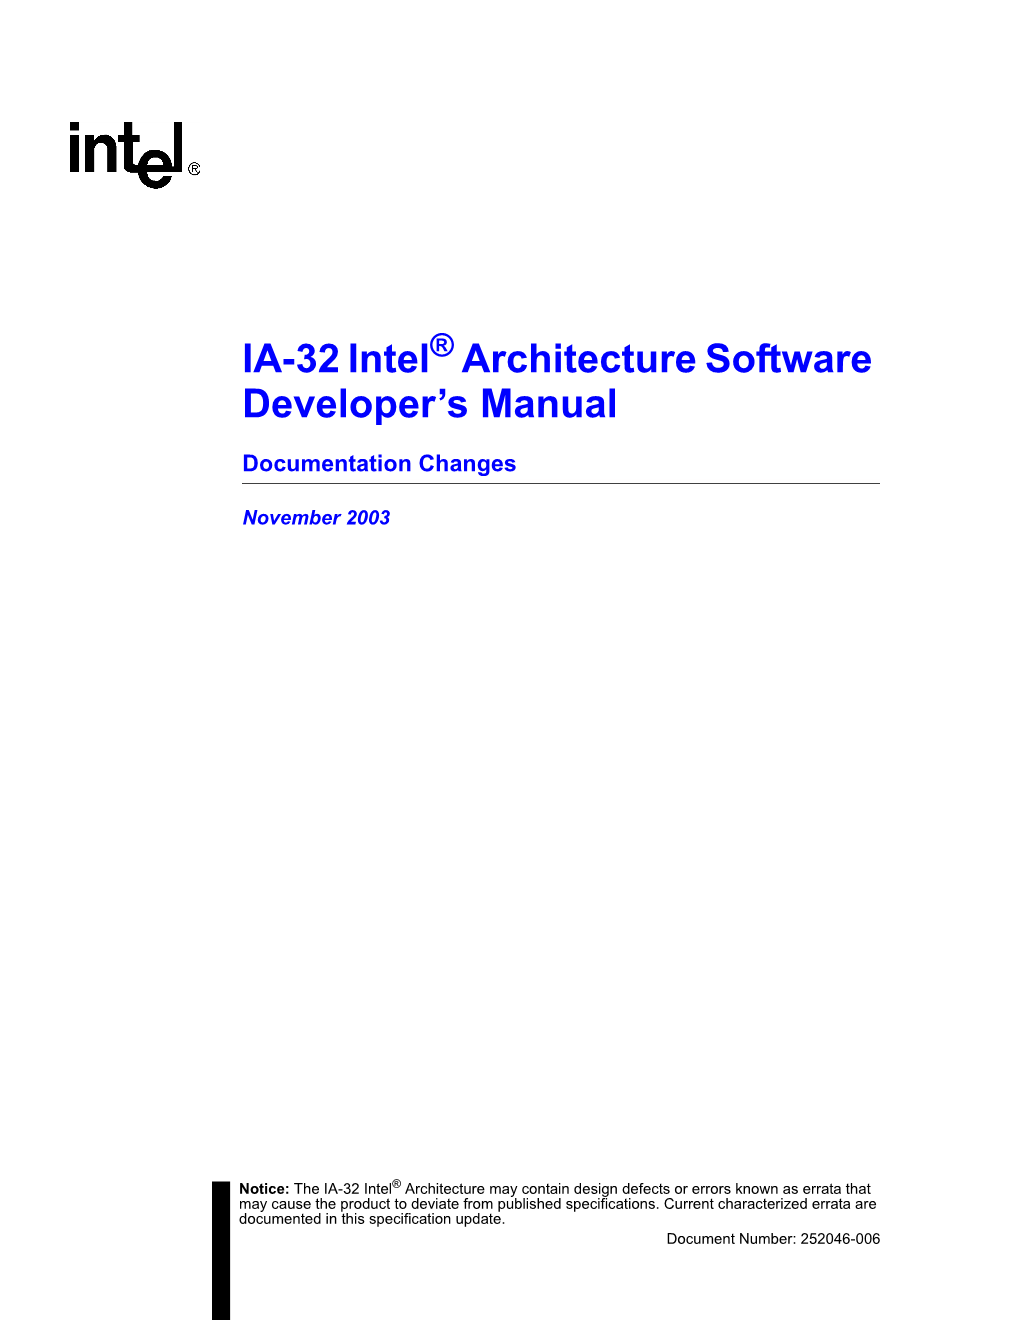 IA-32 Intel® Architecture Software Developer's Manual Documentation